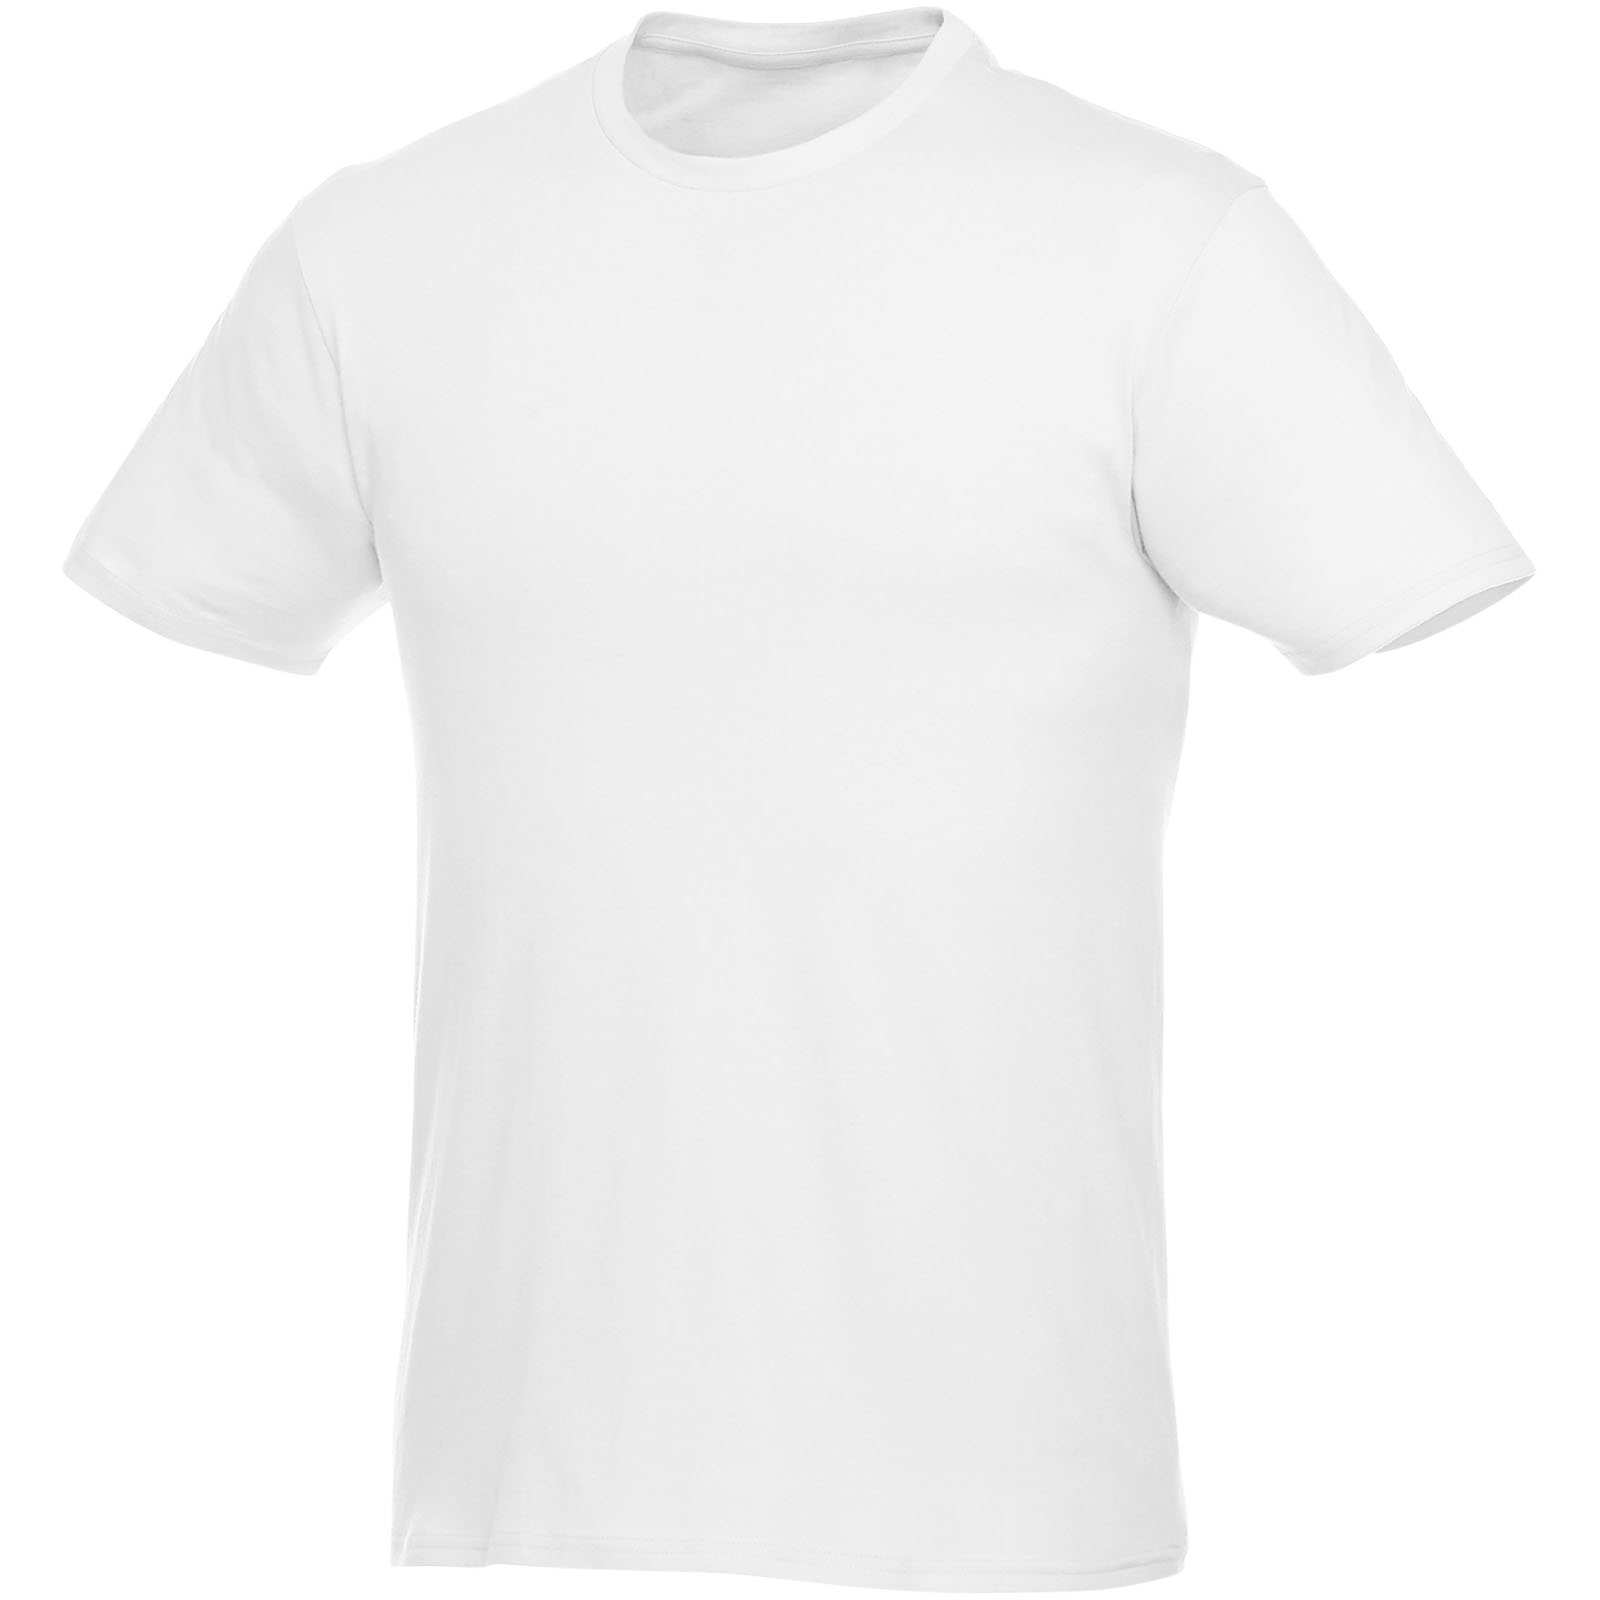 Clothing - Heros short sleeve men's t-shirt